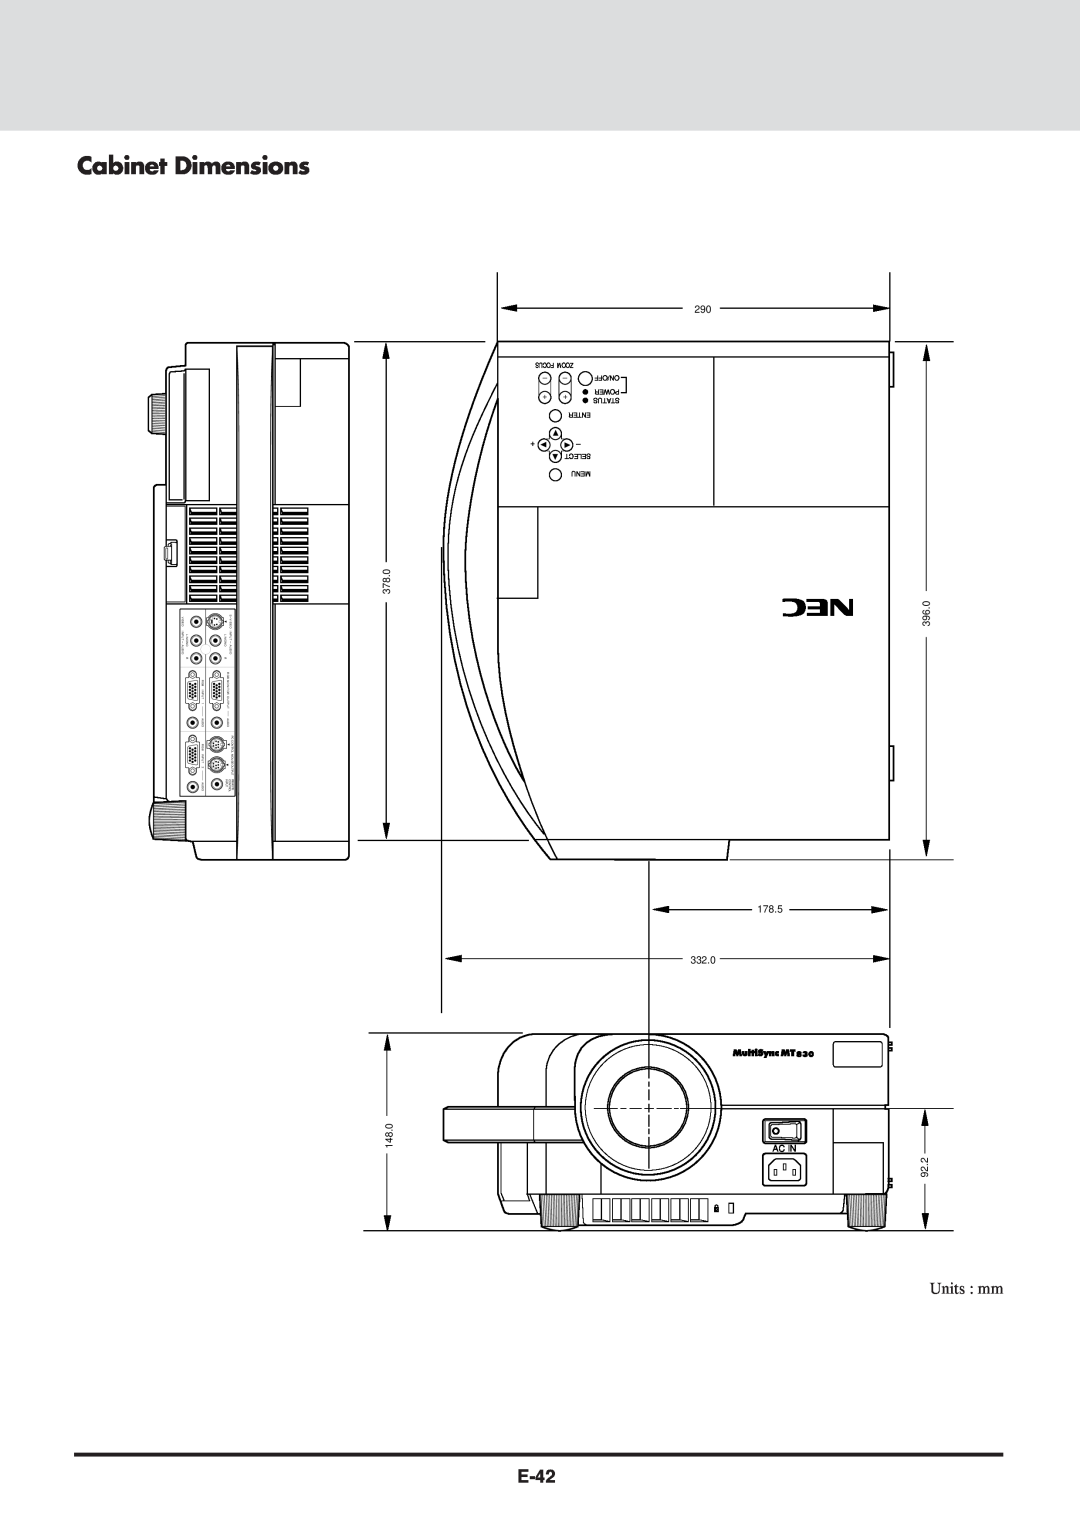 NEC MT830 user manual Cabinet Dimensions, E-42, Units mm, 148.0, 92.2, Ac In, Focus Zoom, ++ Status Enter, Select Menu 